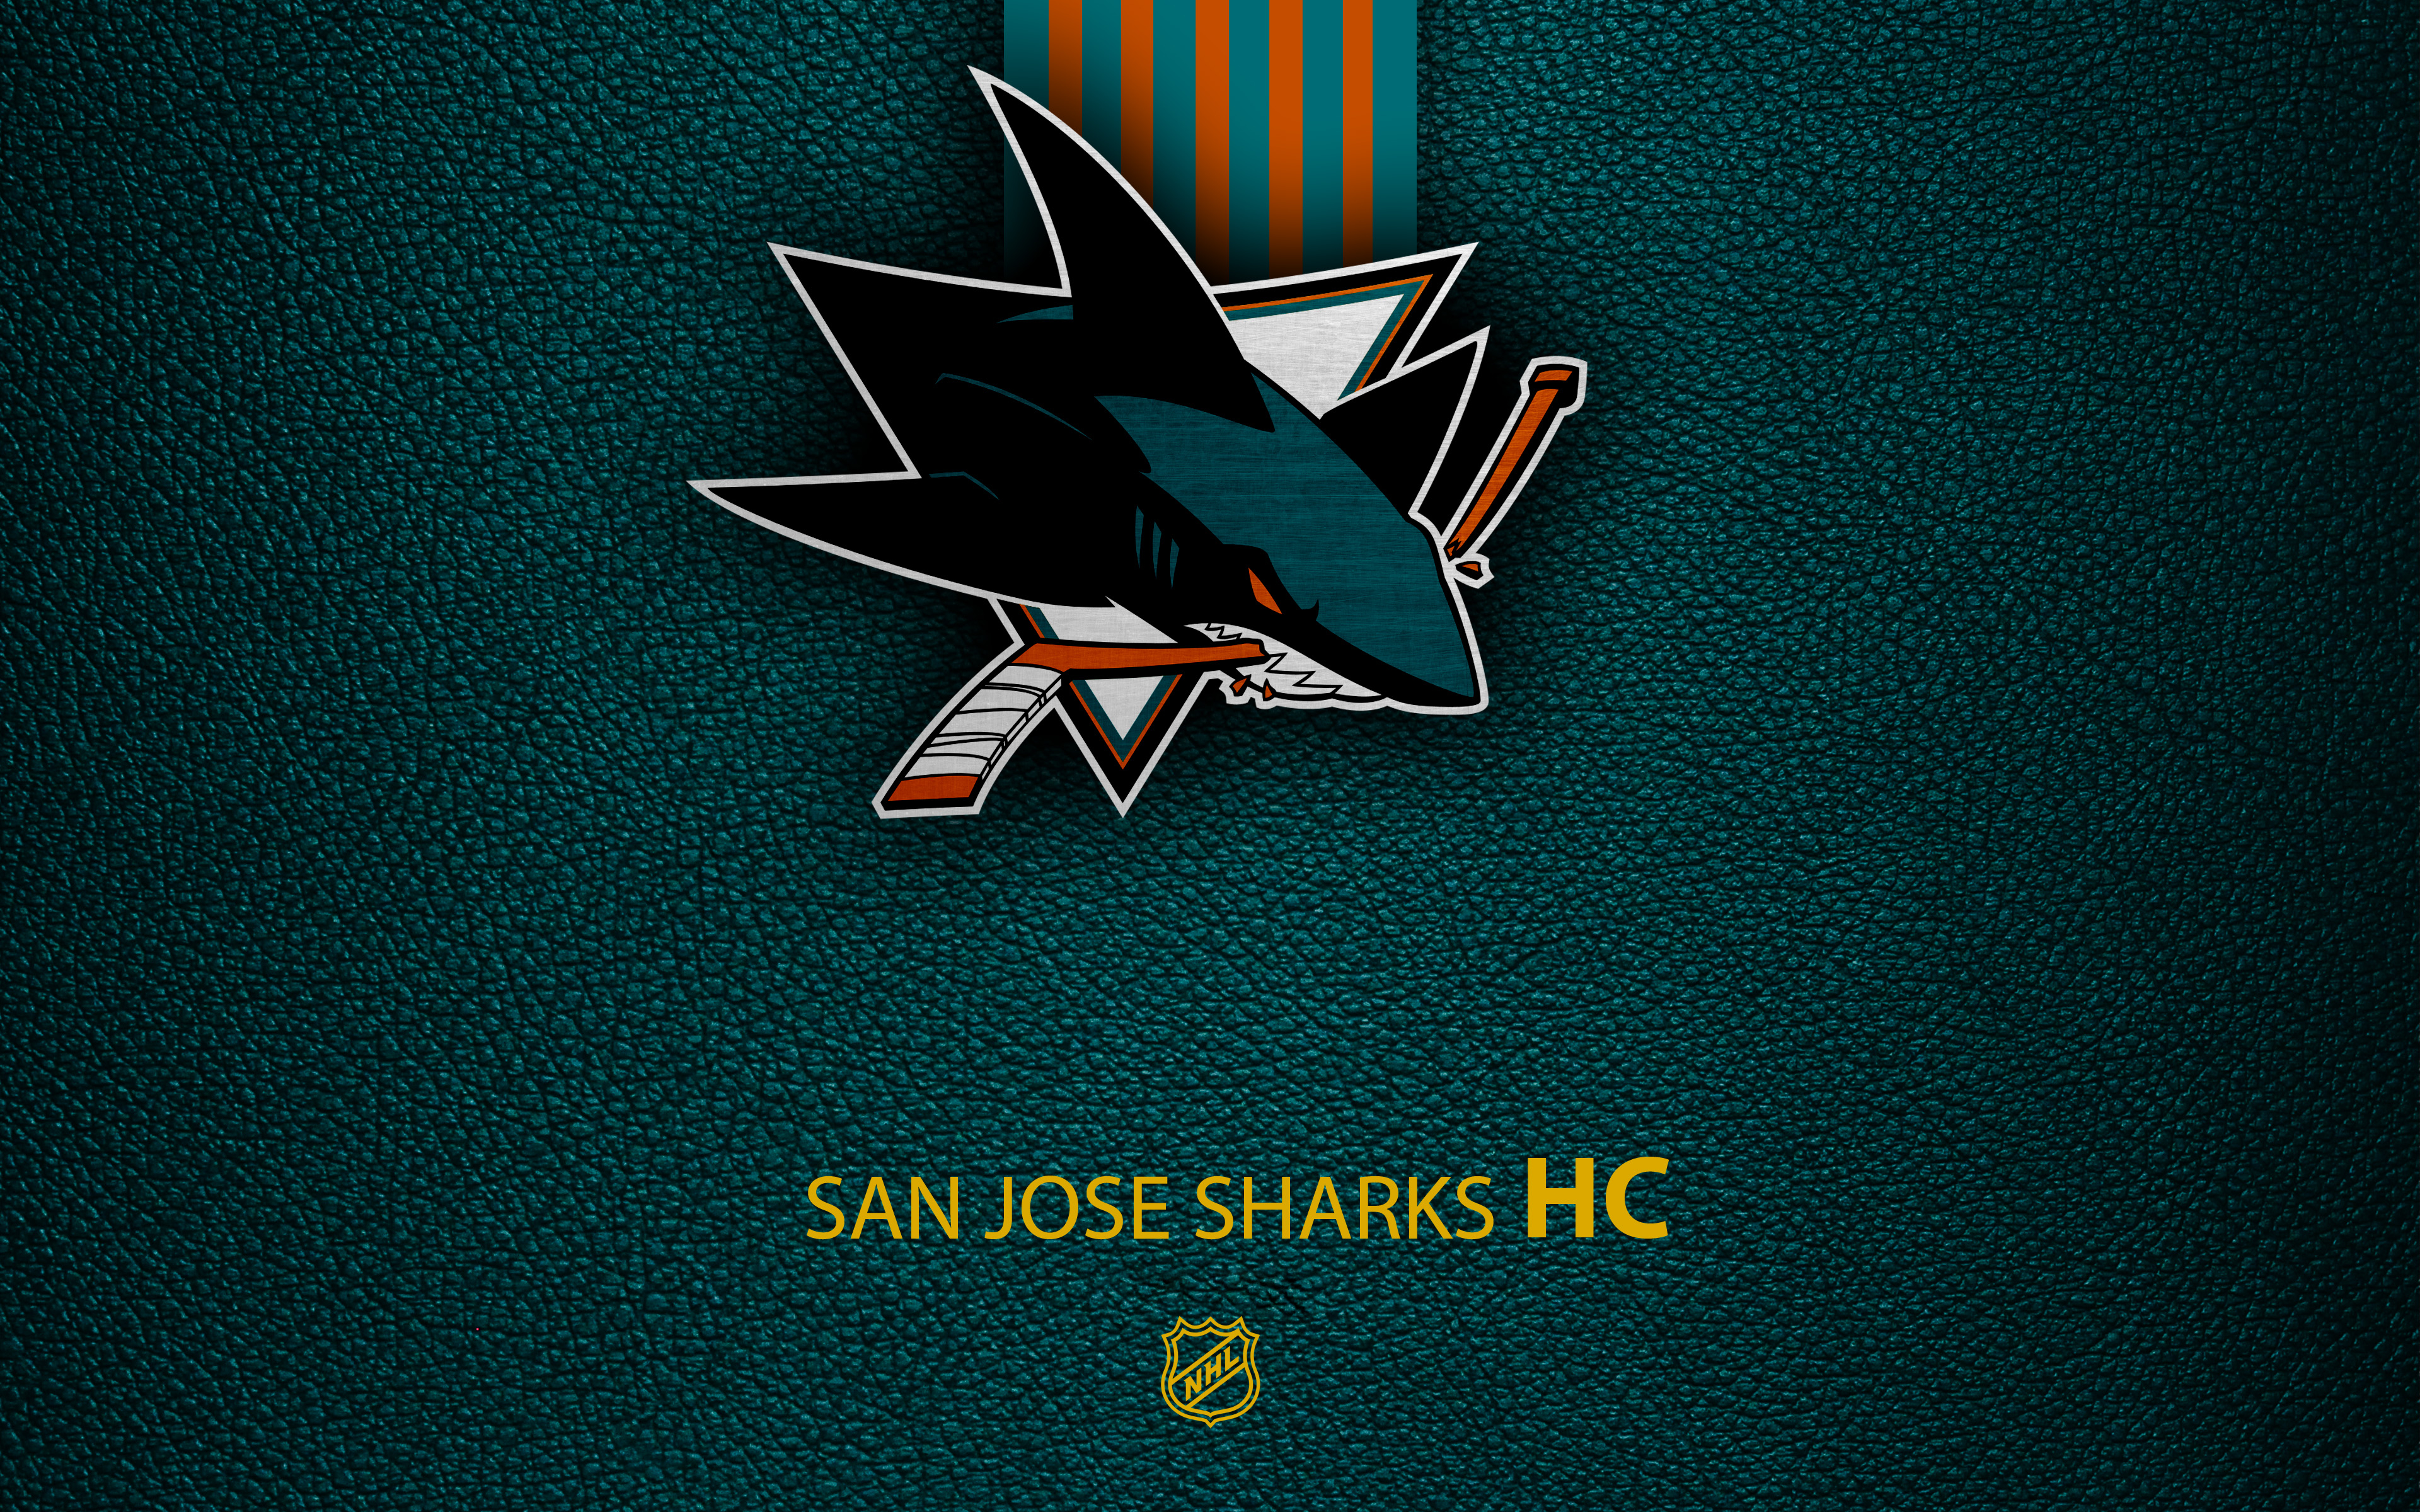 New Lock Screen Wallpapers san jose sharks, sports, emblem, logo, nhl, hockey